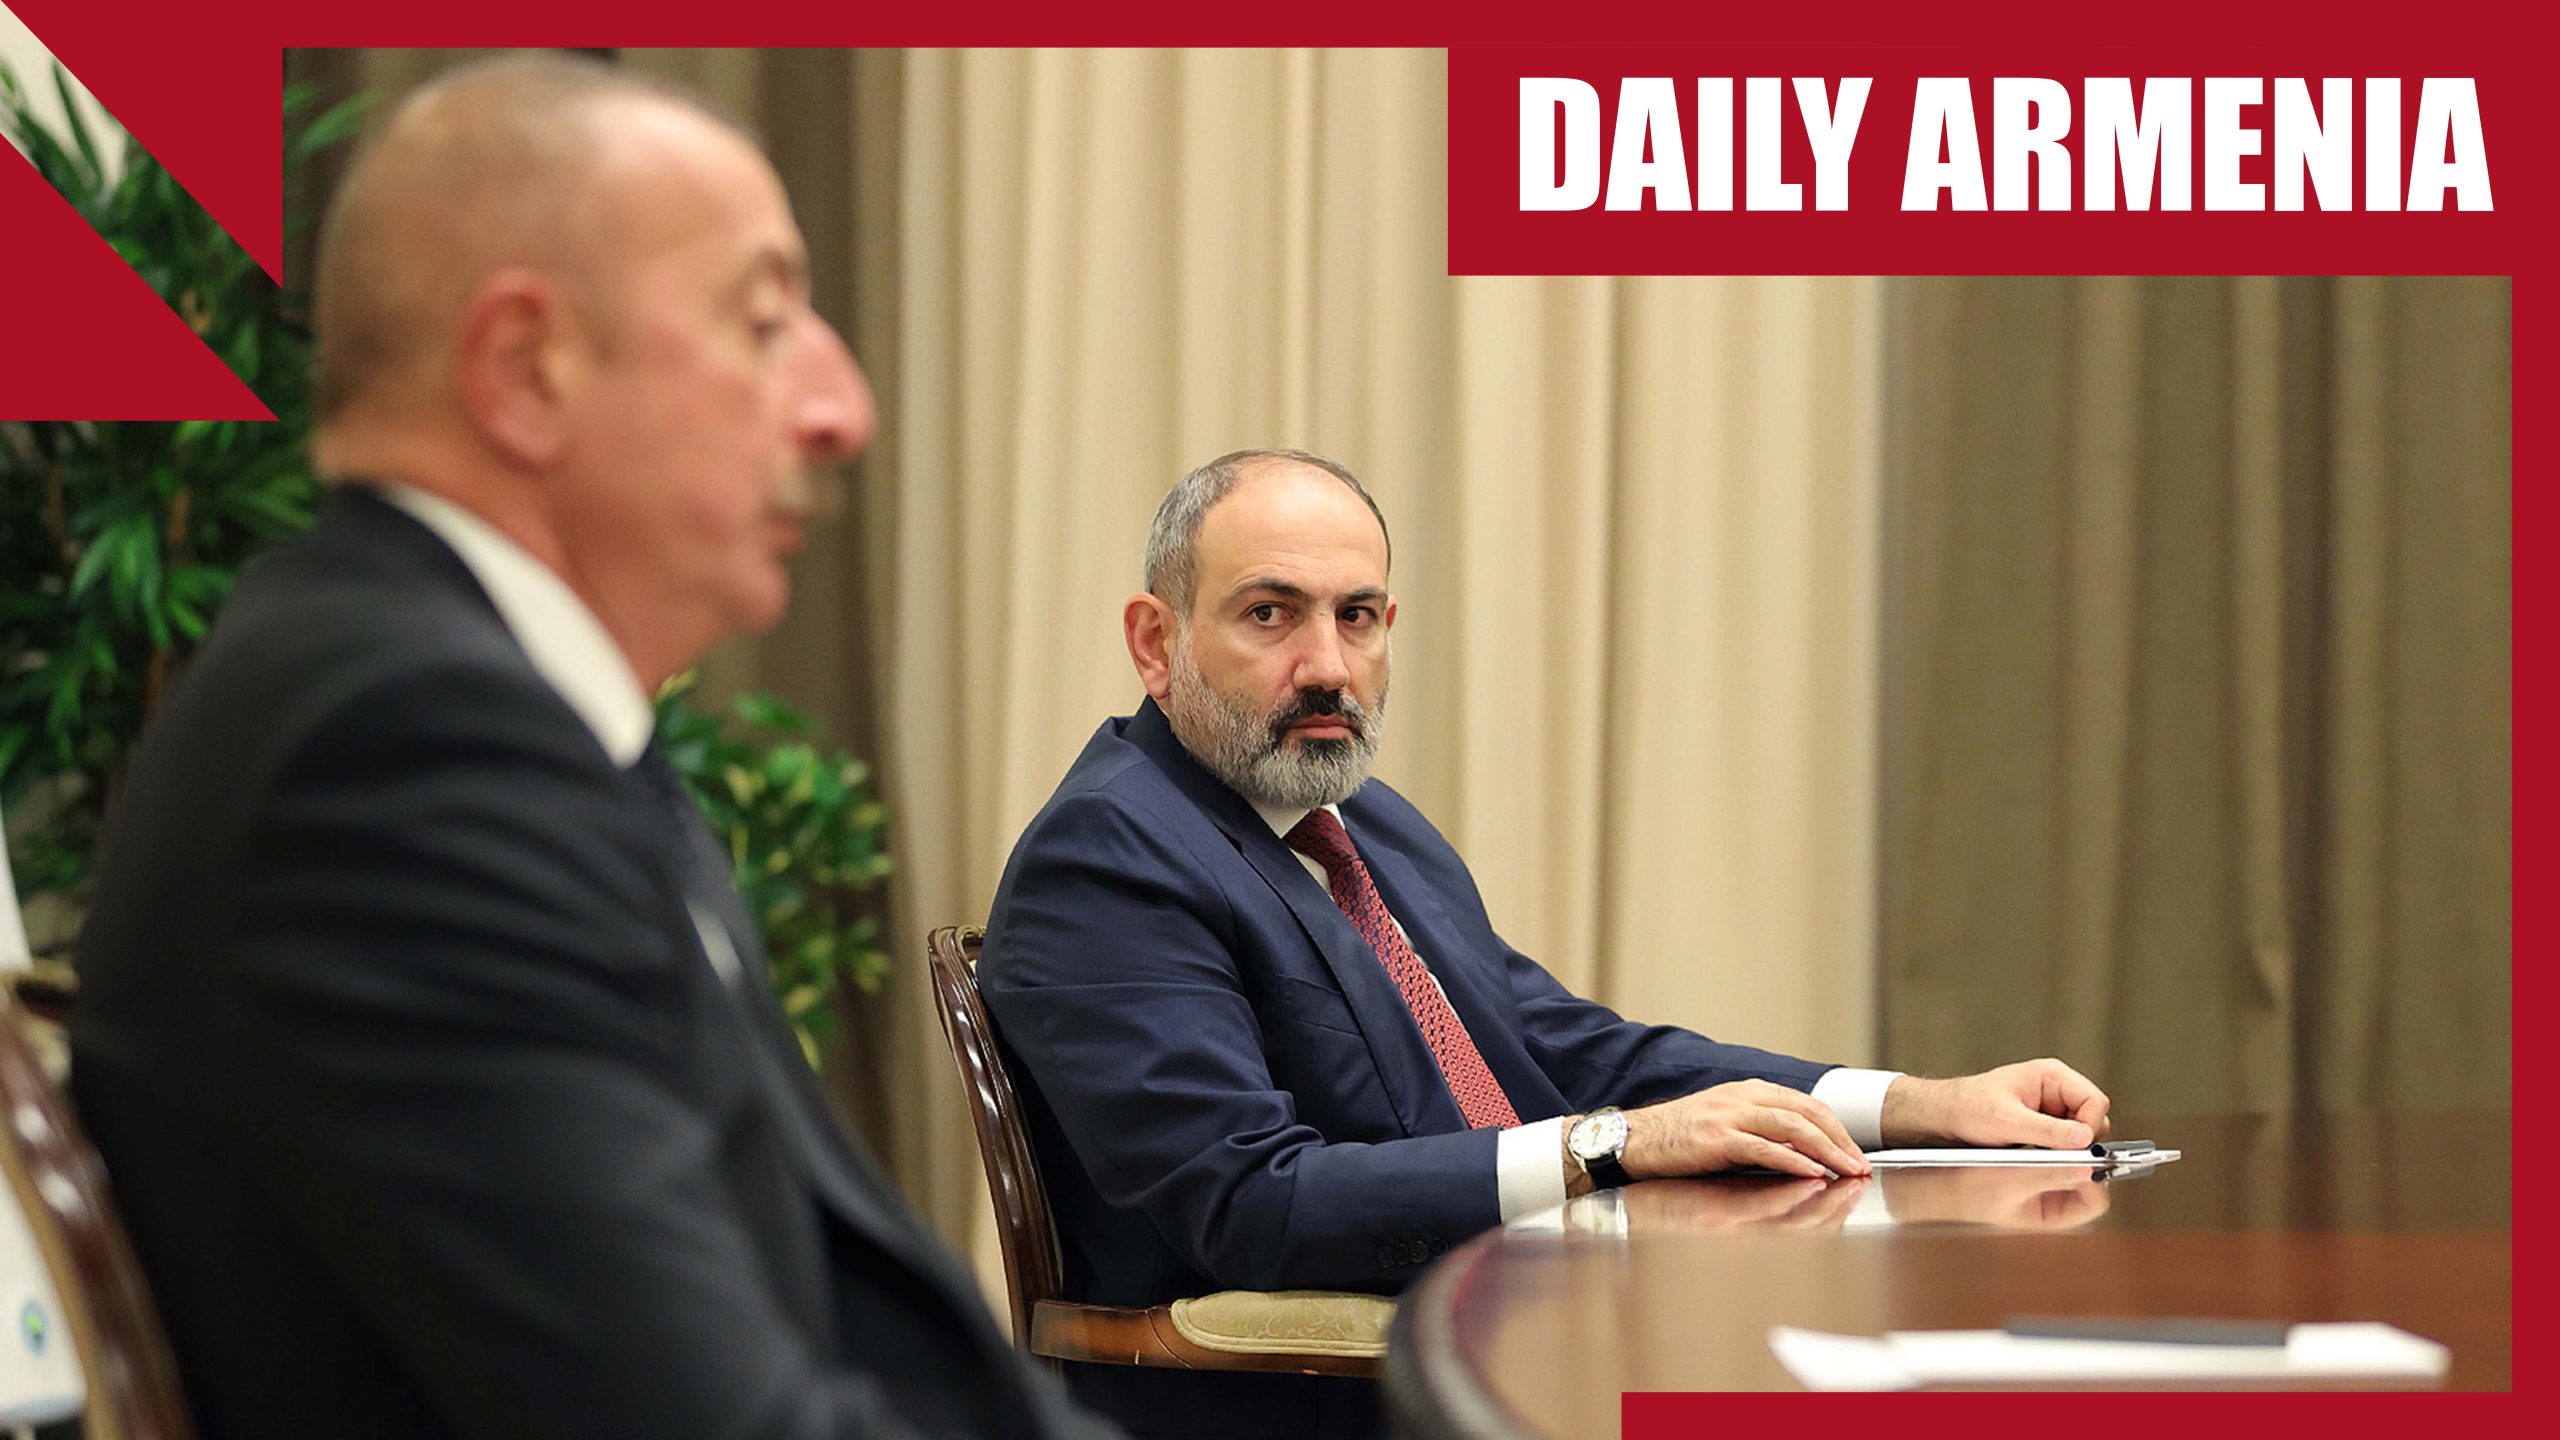 Despite lack of progress, Kremlin says Armenia, Azerbaijan close to peace deal